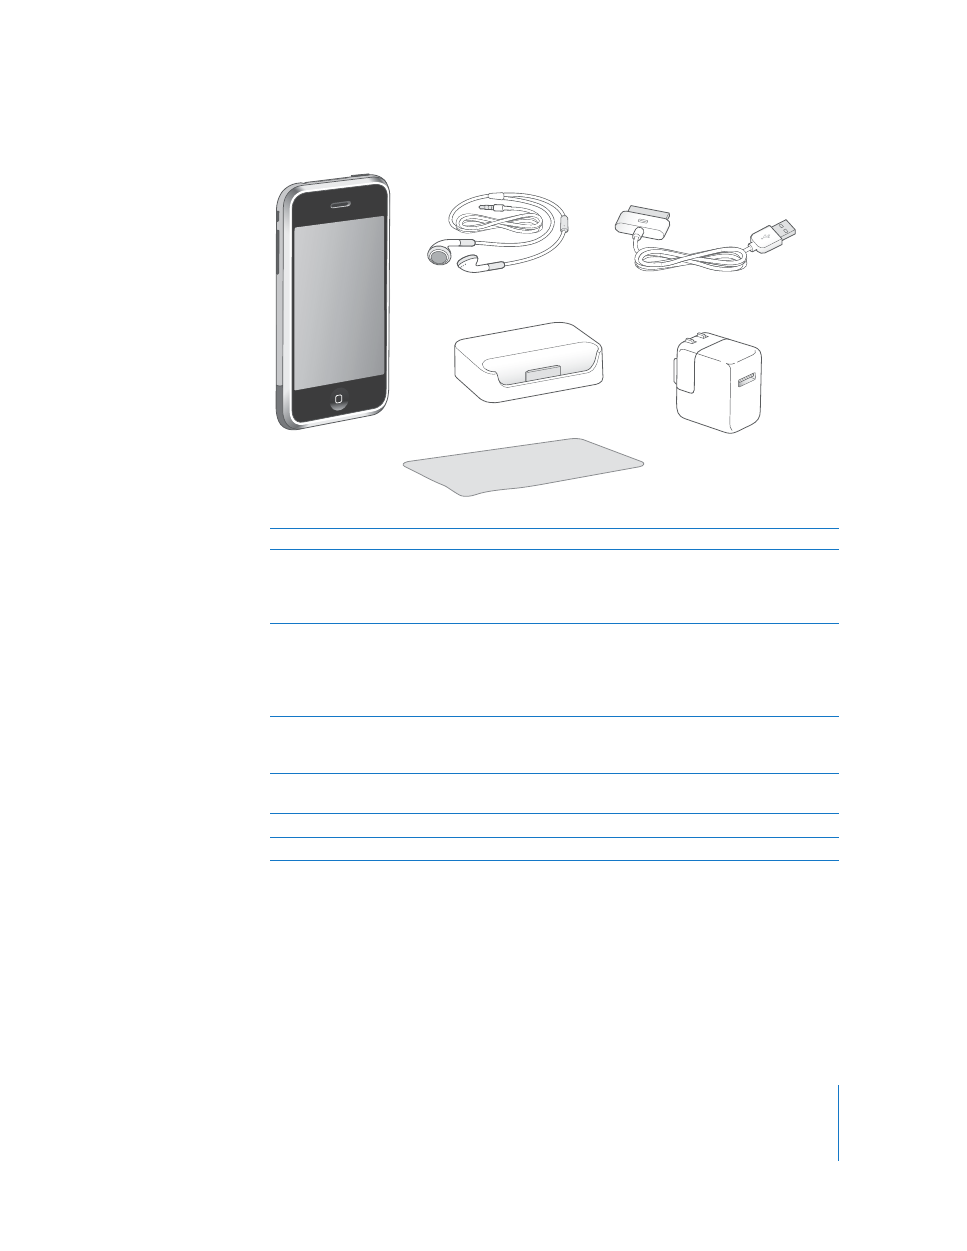 Iphone 4s User Manual Free Download Pdf